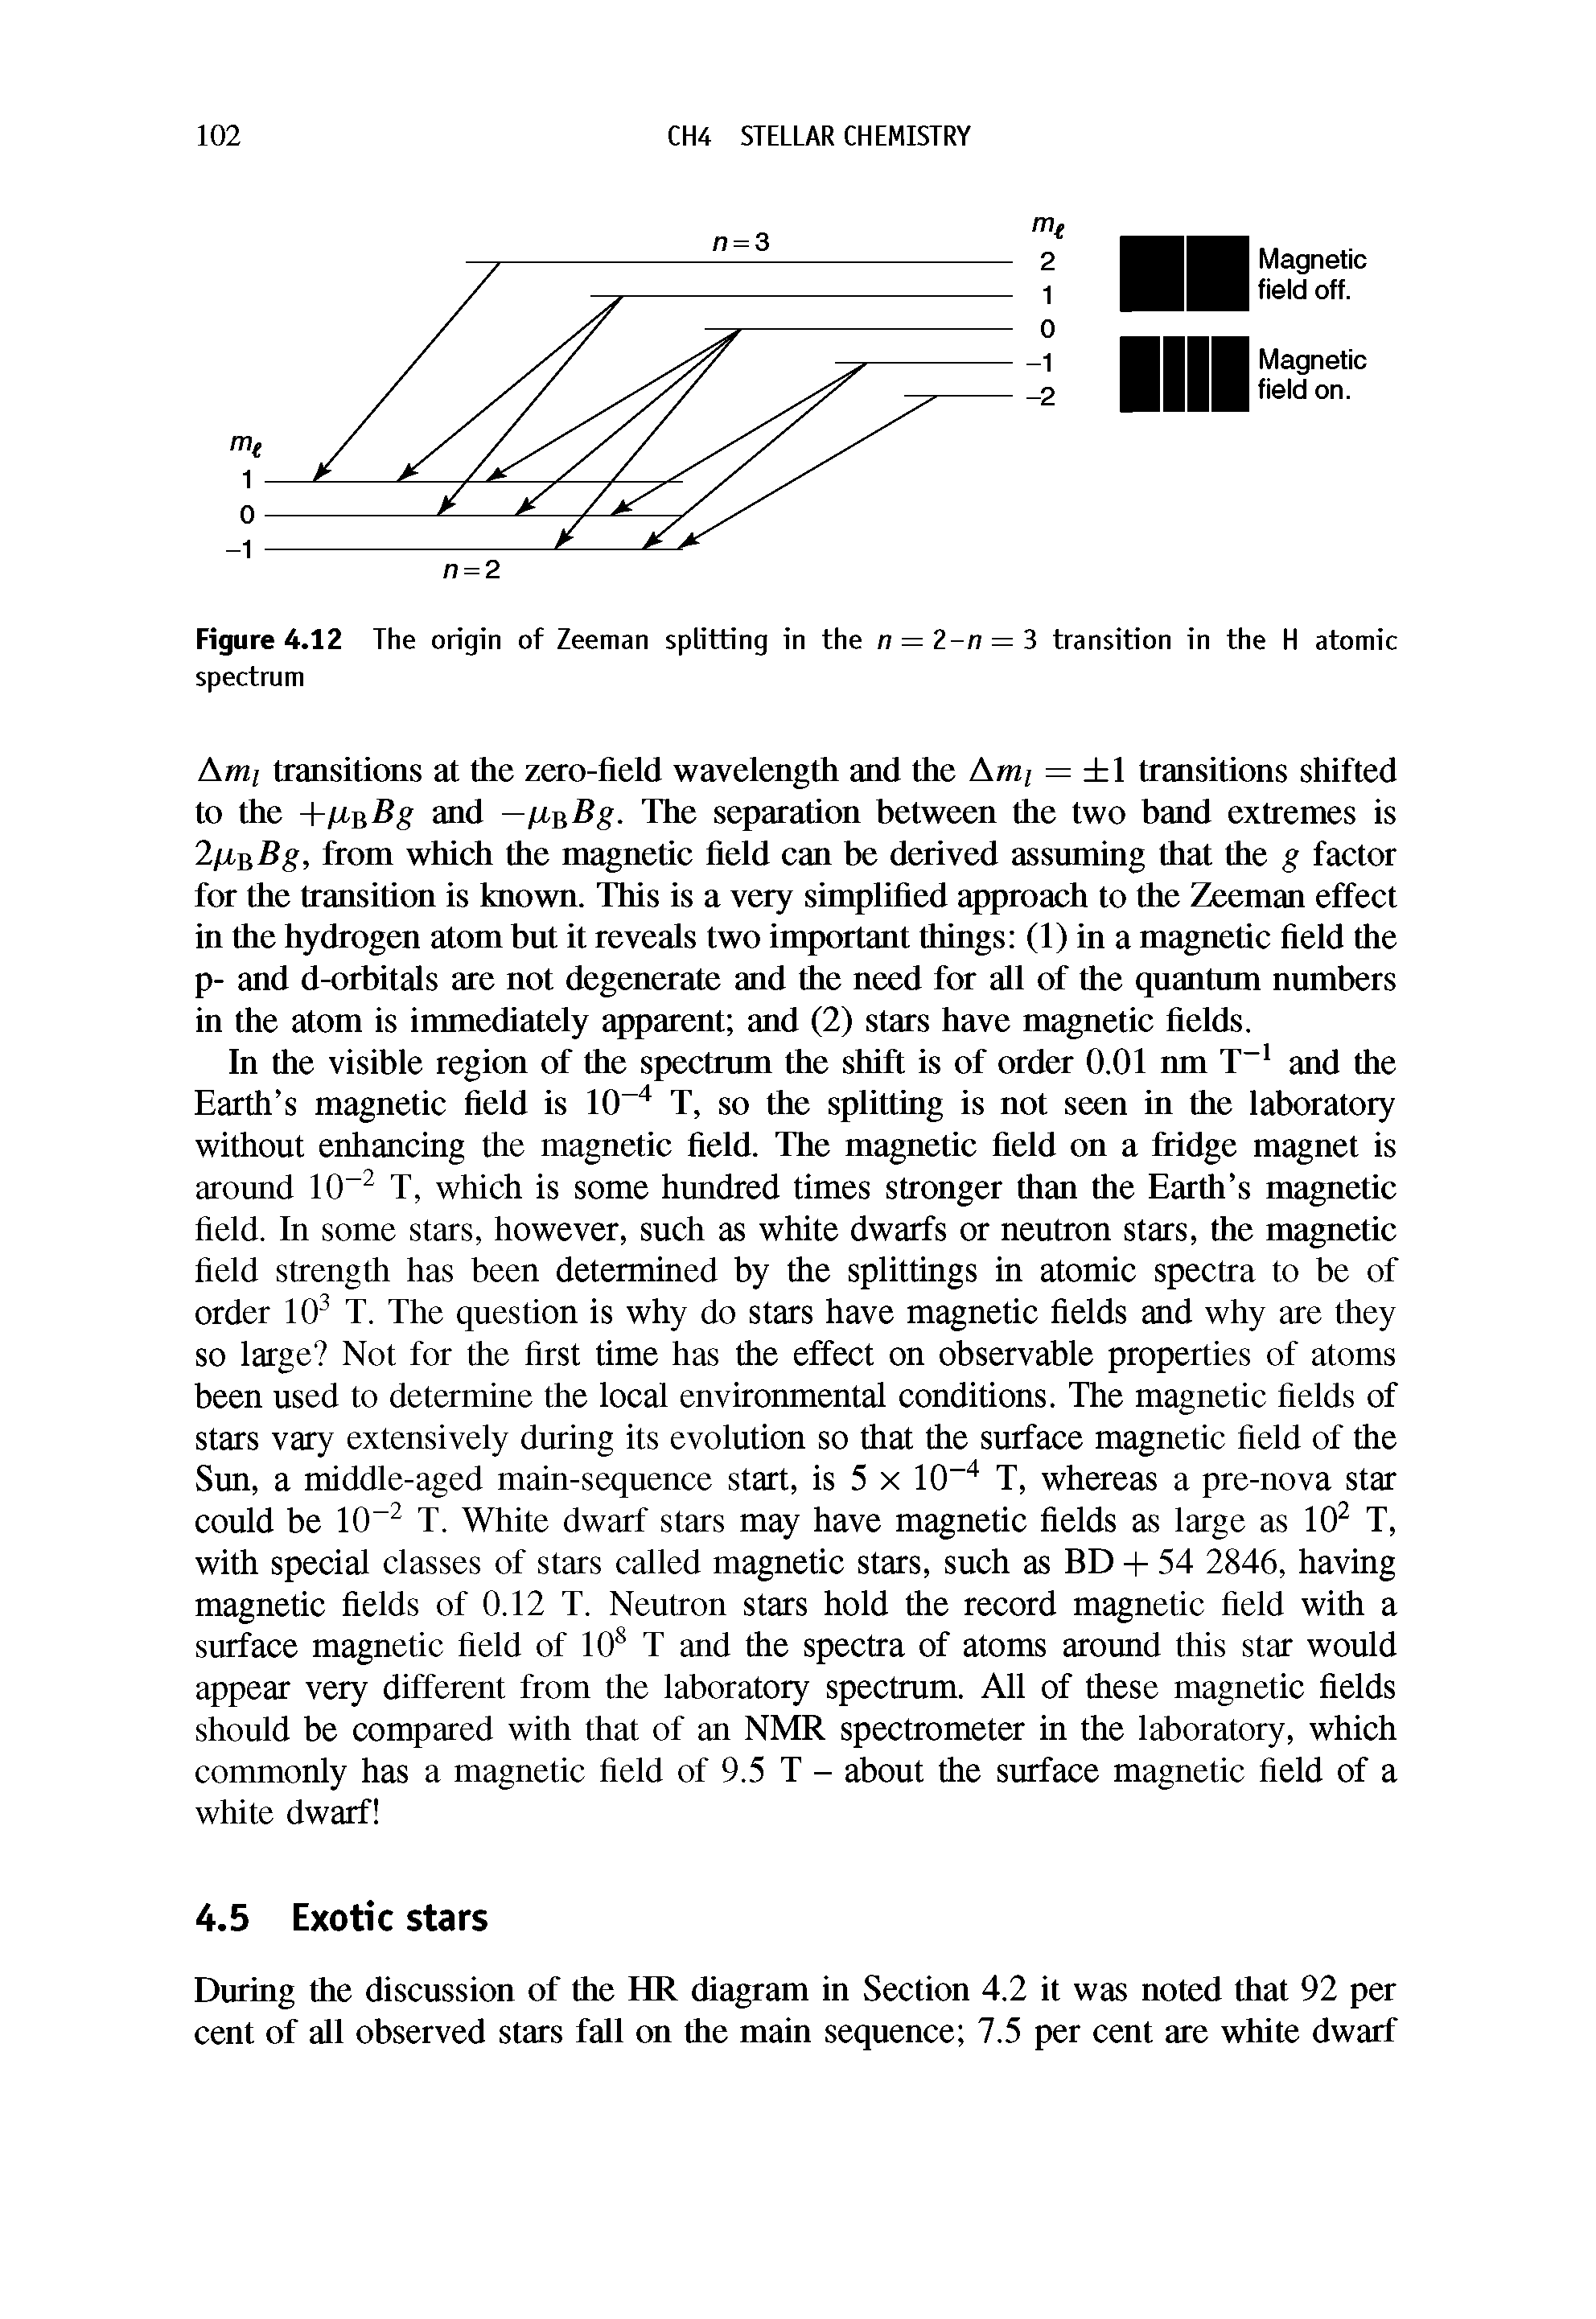 Figure 4.12 The origin of Zeeman splitting in the n = 2-n = 3 transition in the H atomic spectrum...